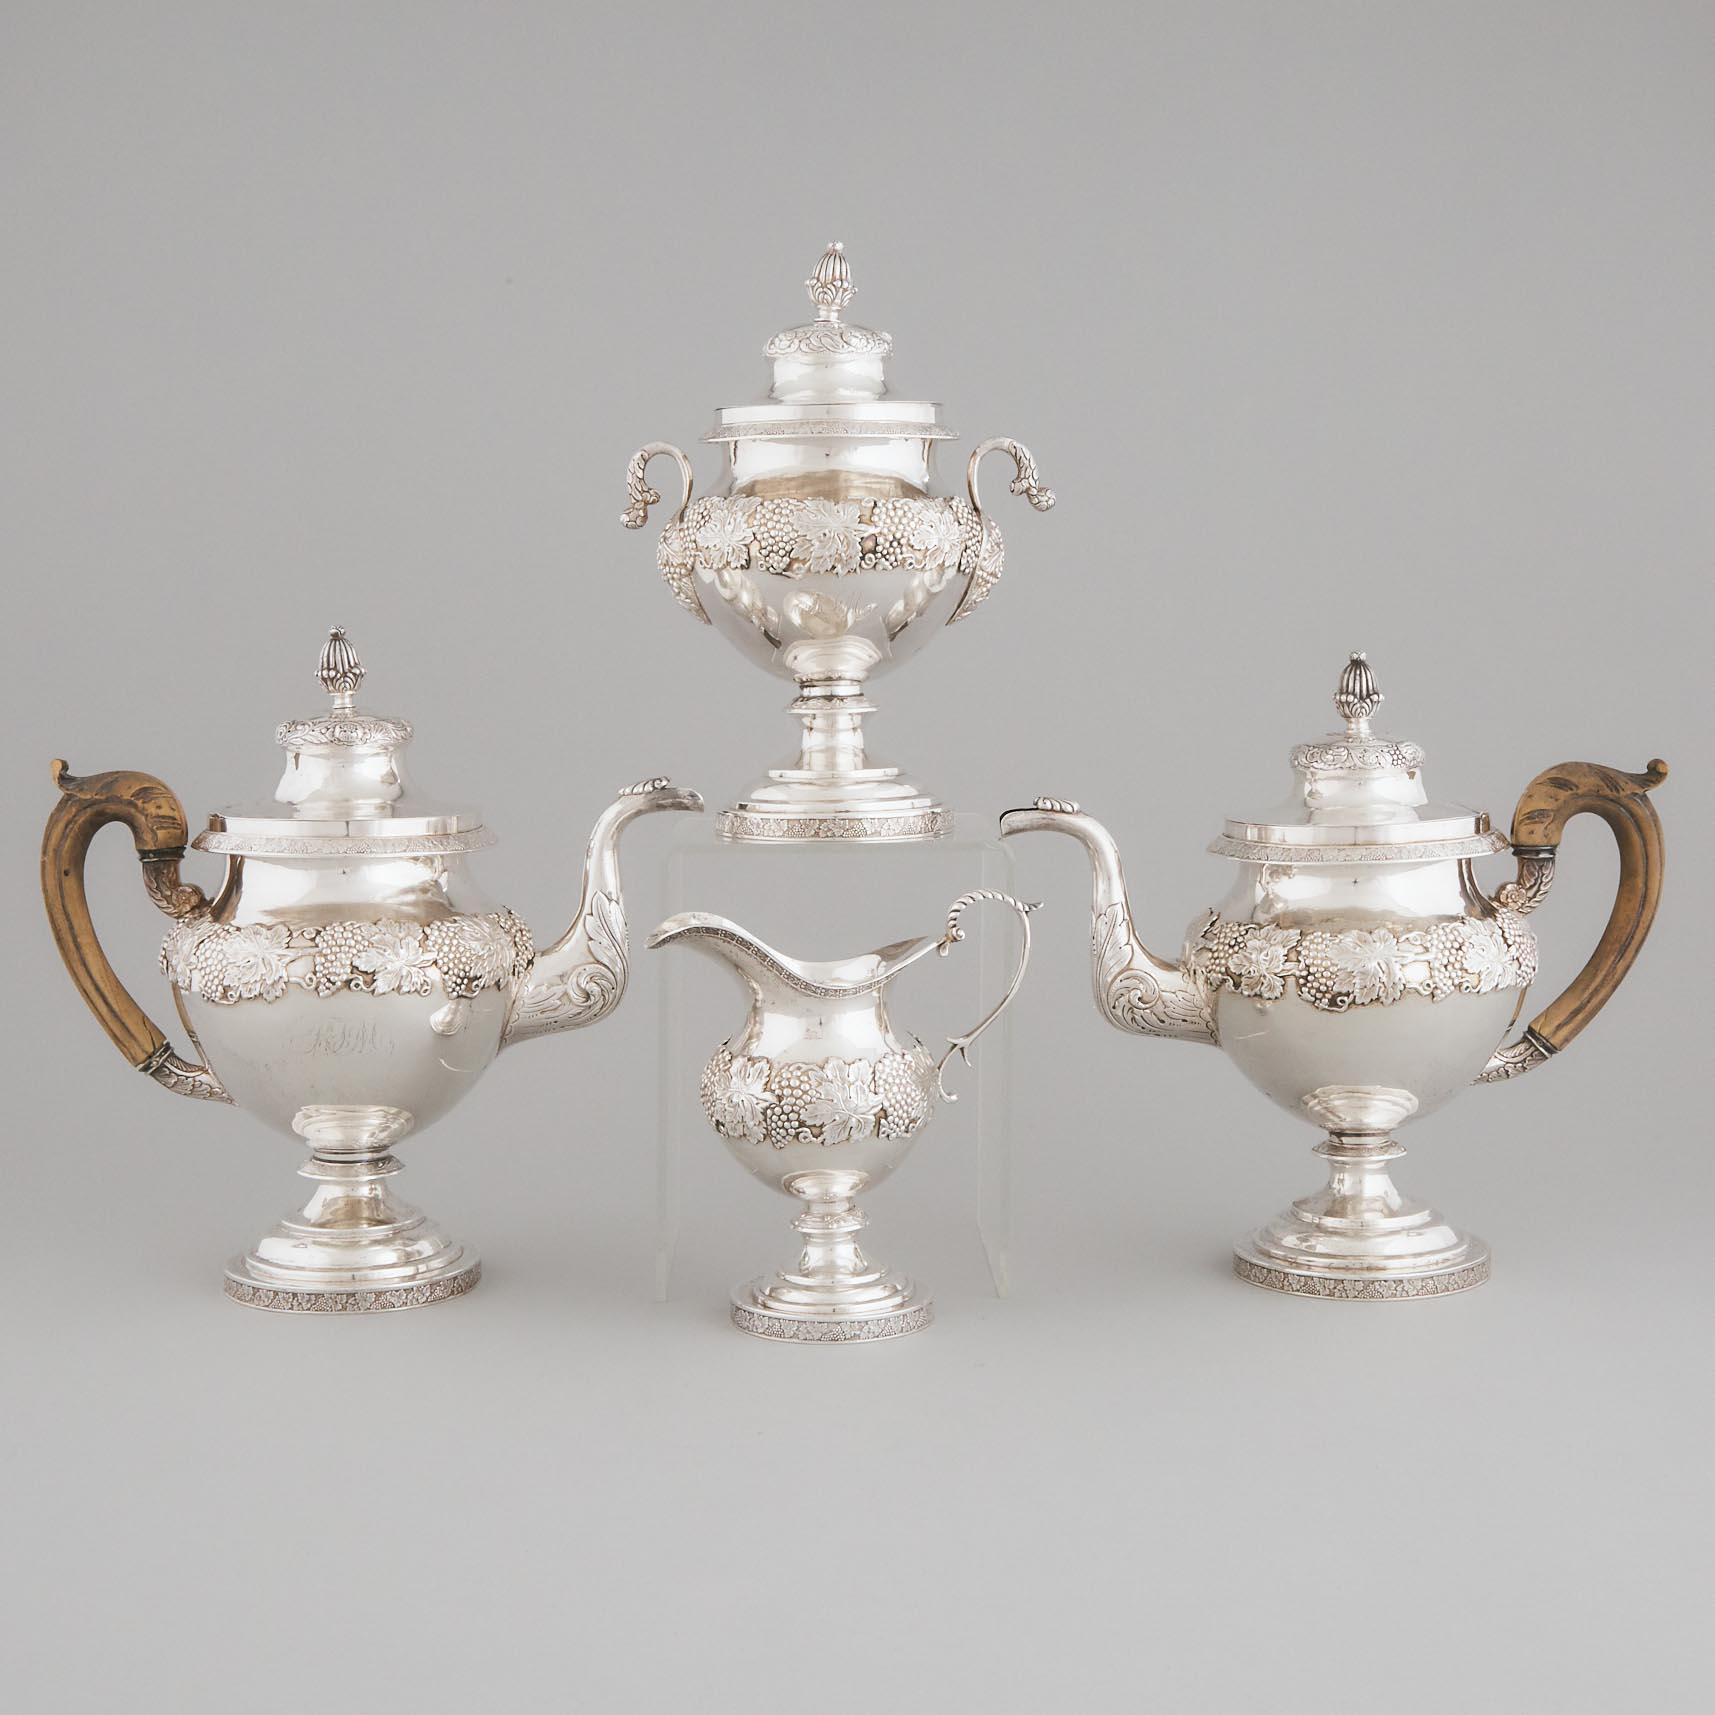 American Silver Tea and Coffee Service, George K. Childs, Philadelphia, Pa., c.1828-59